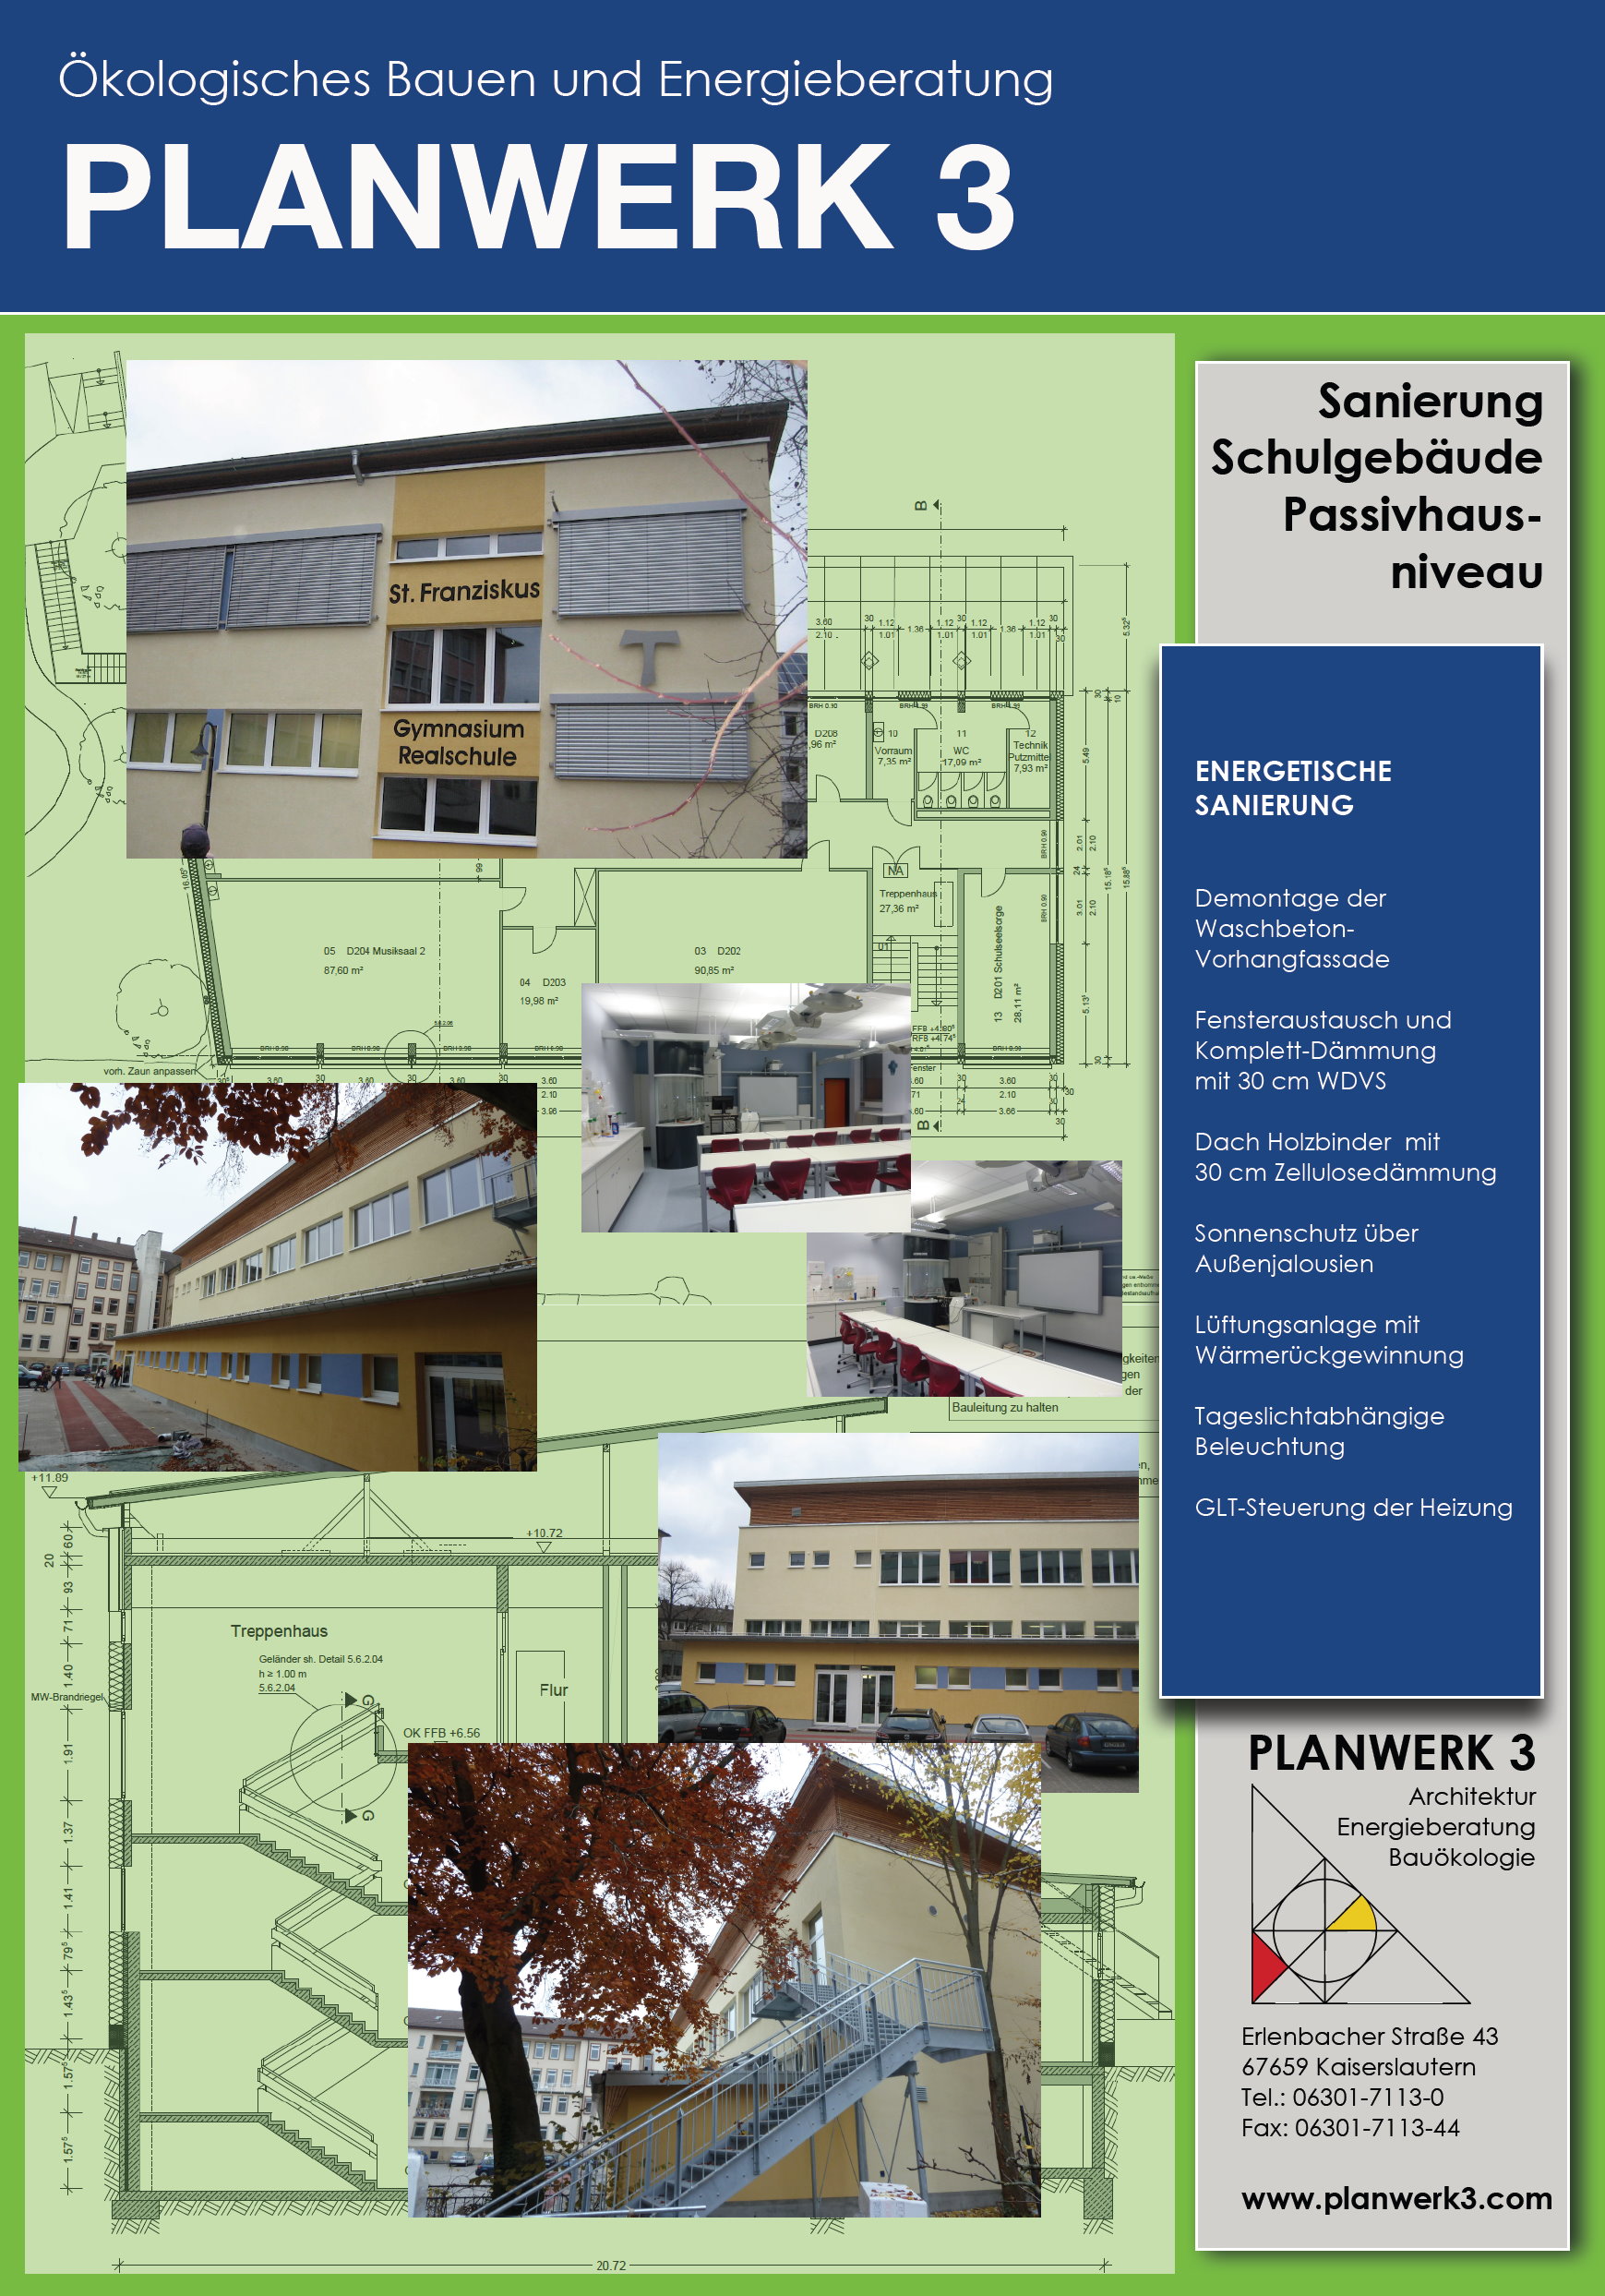 Passivhaus-Niveau, Sanierung Schulgebäude, Kaiserslautern